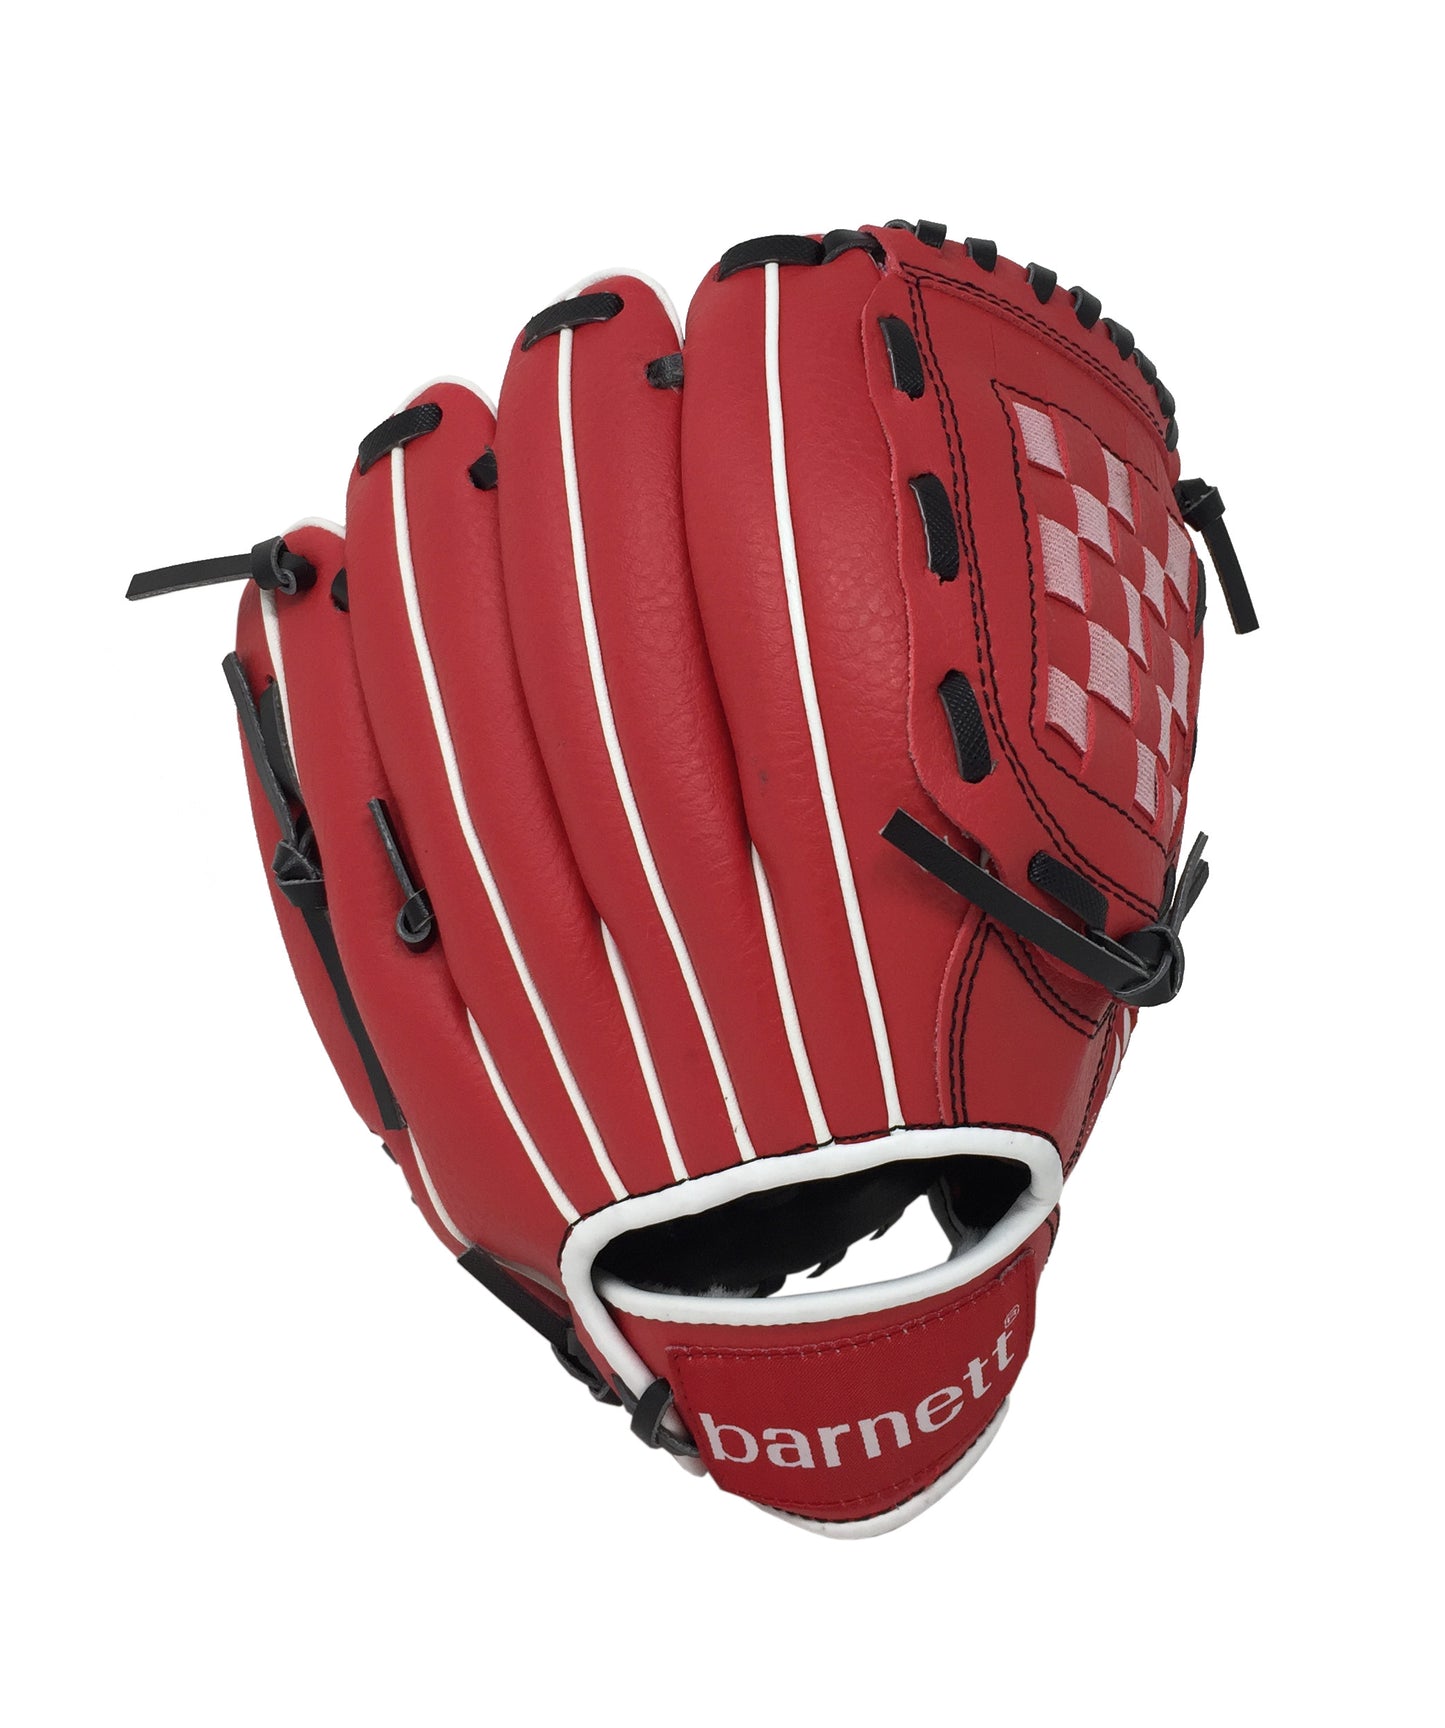 JL-105 - Gant de baseball, outfield, polyuréthane, taille 10,5" rouge